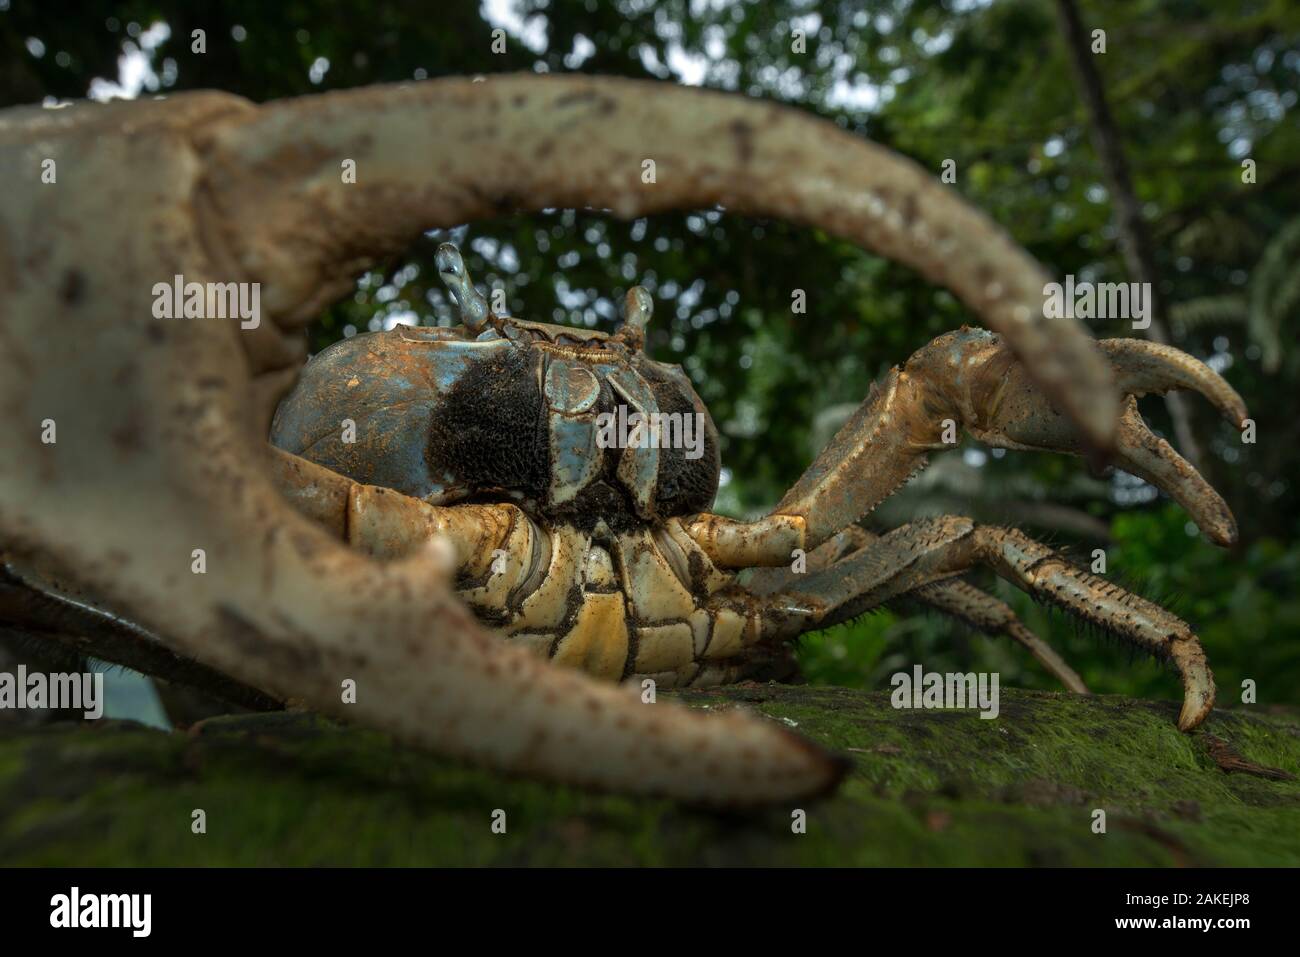 White forest crab (Cardisoma armatum) portrait, seen through claw, Island of Principe UNESCO Biosphere Reserve, Democratic Republic of Sao Tome and Principe, Gulf of Guinea. Stock Photo